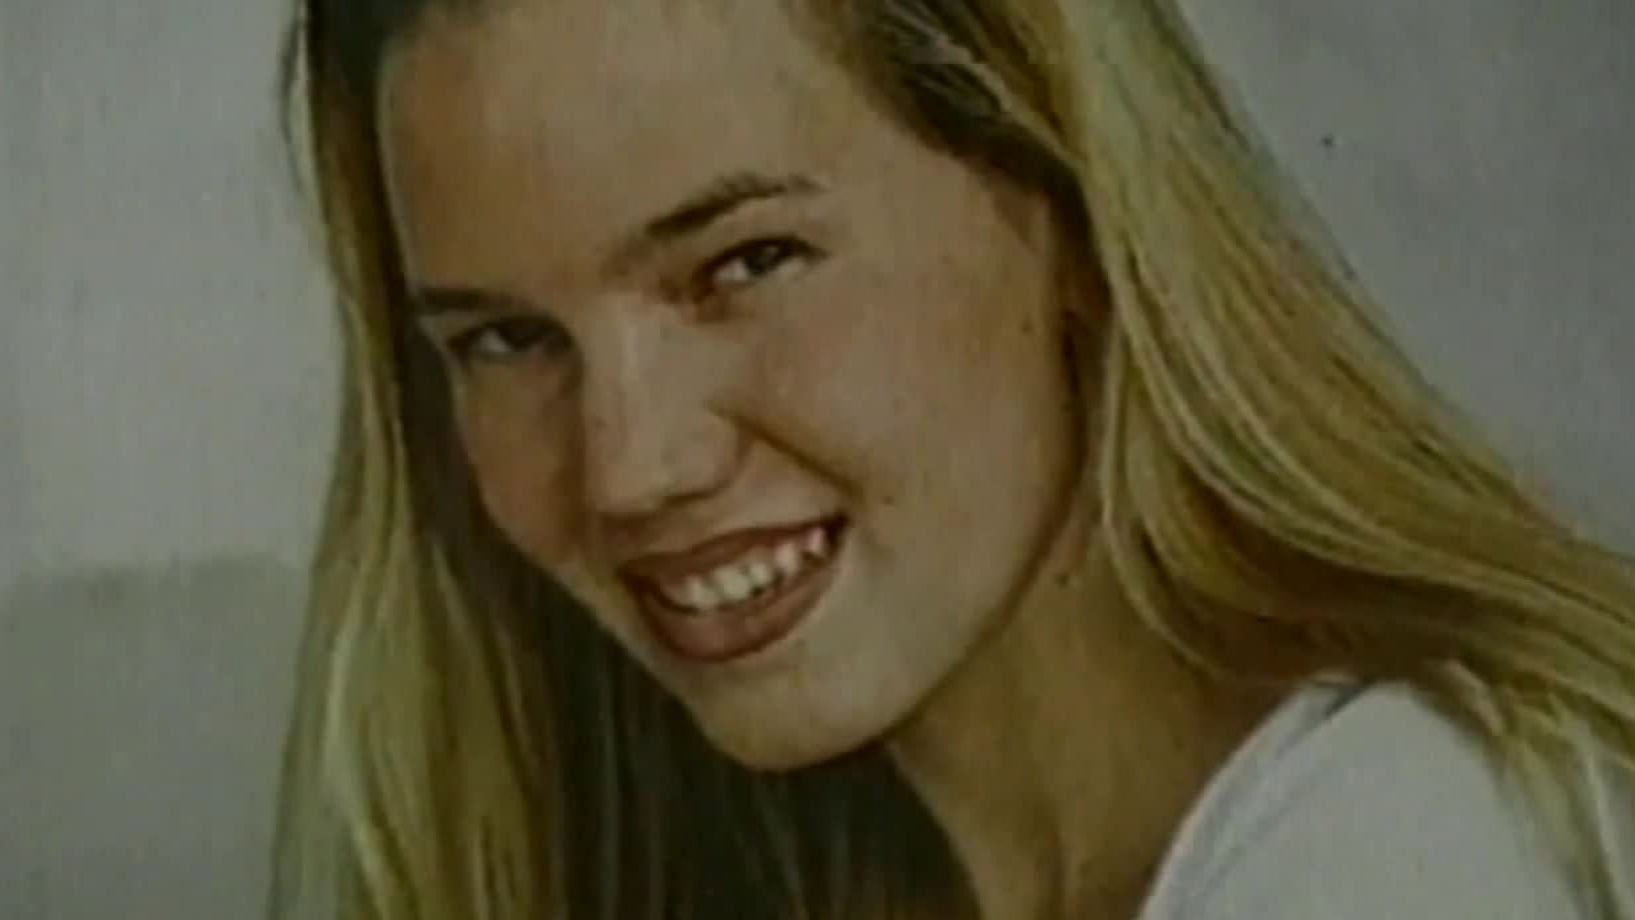 Kristin Smart was last seen May 25, 1996